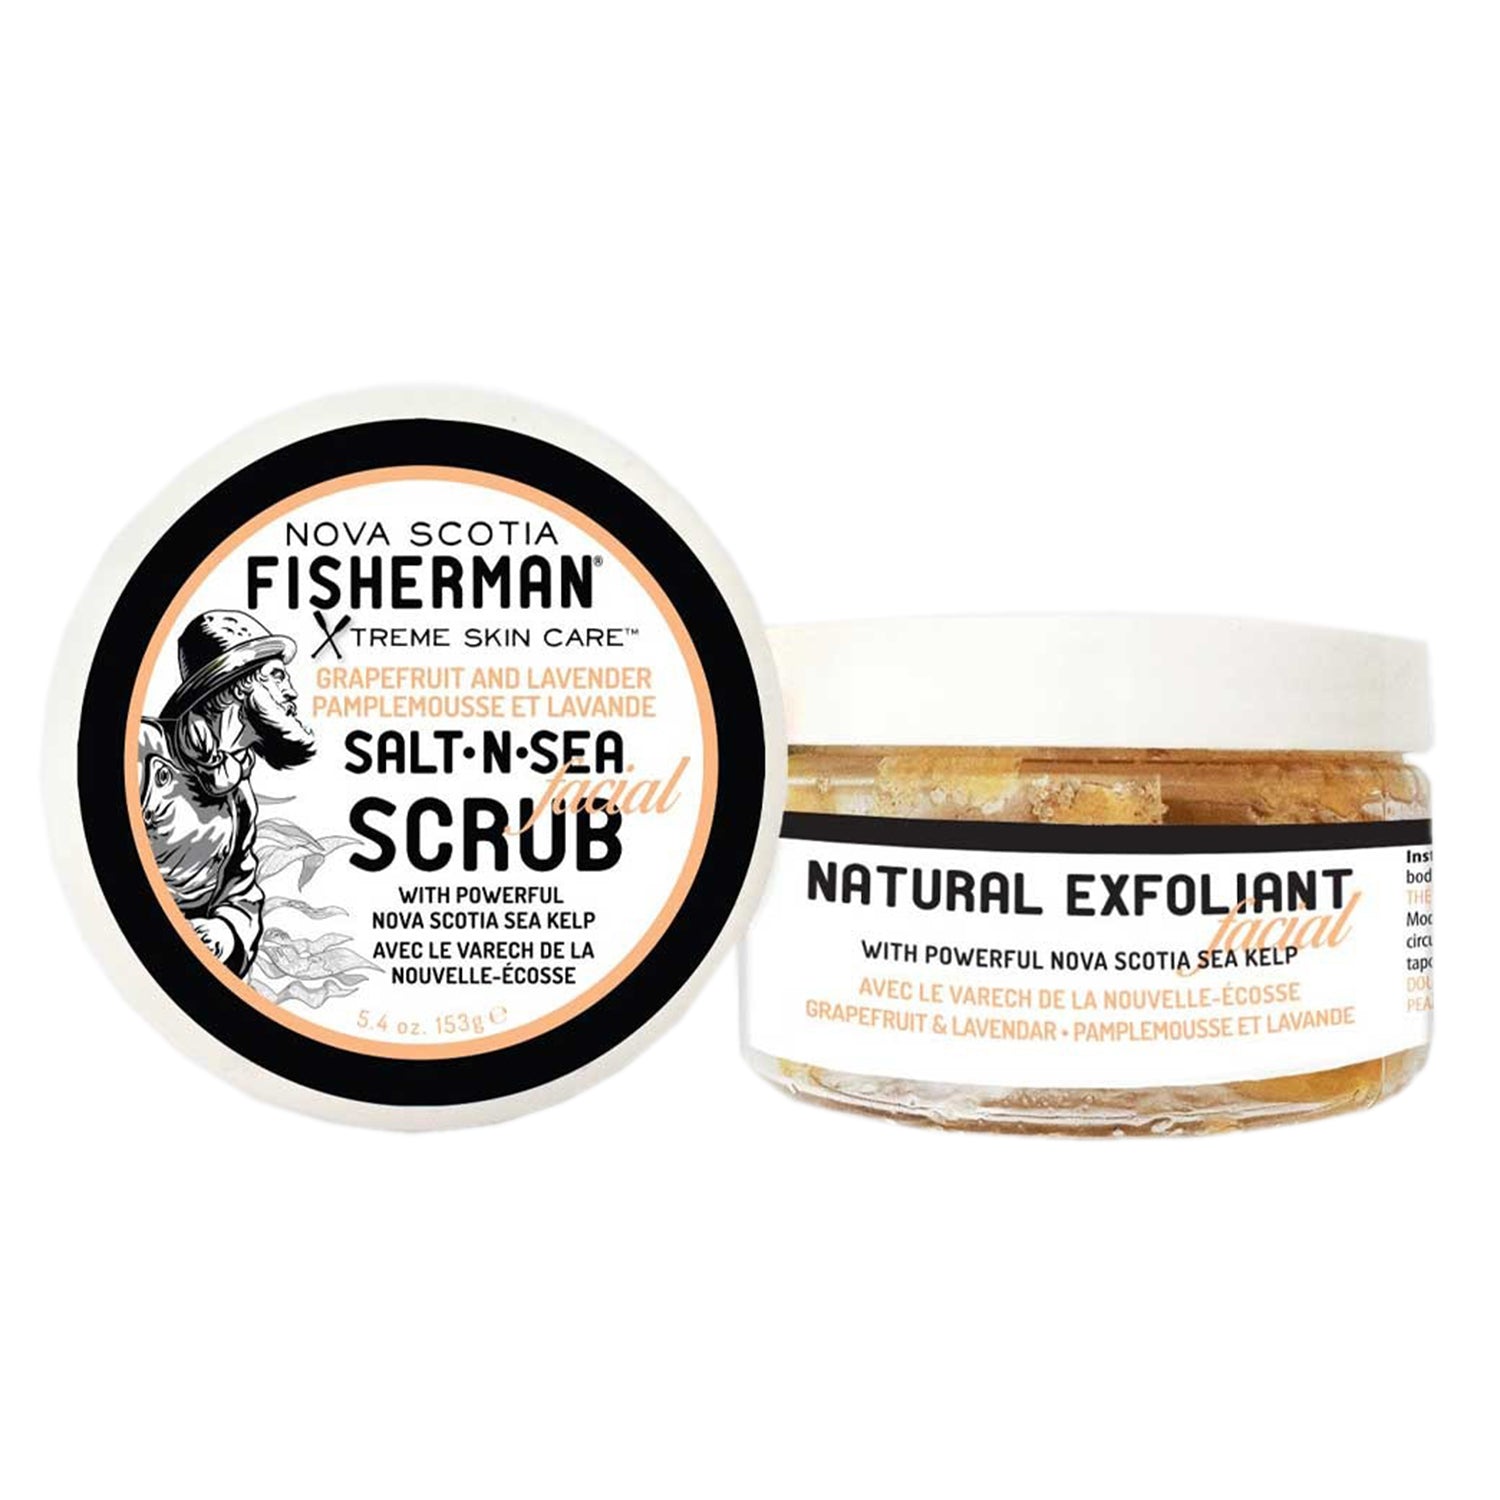 NOVA SCOTIA FISHERMAN Salt-N-Sea Facial Scrub